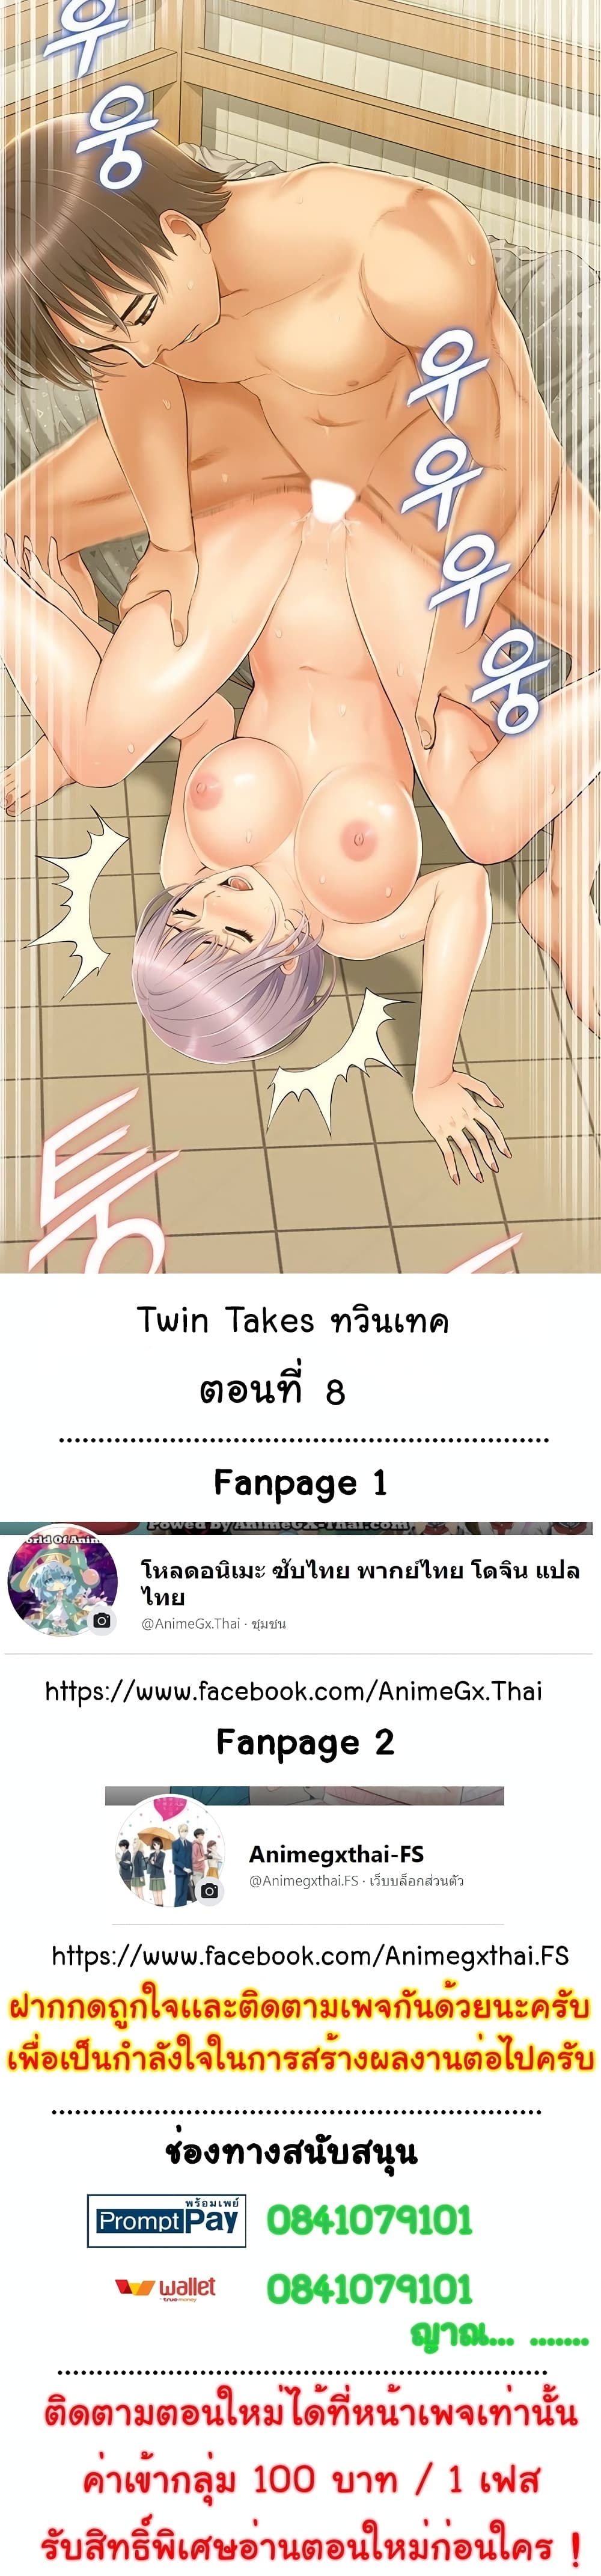 Twin Takes 8 01